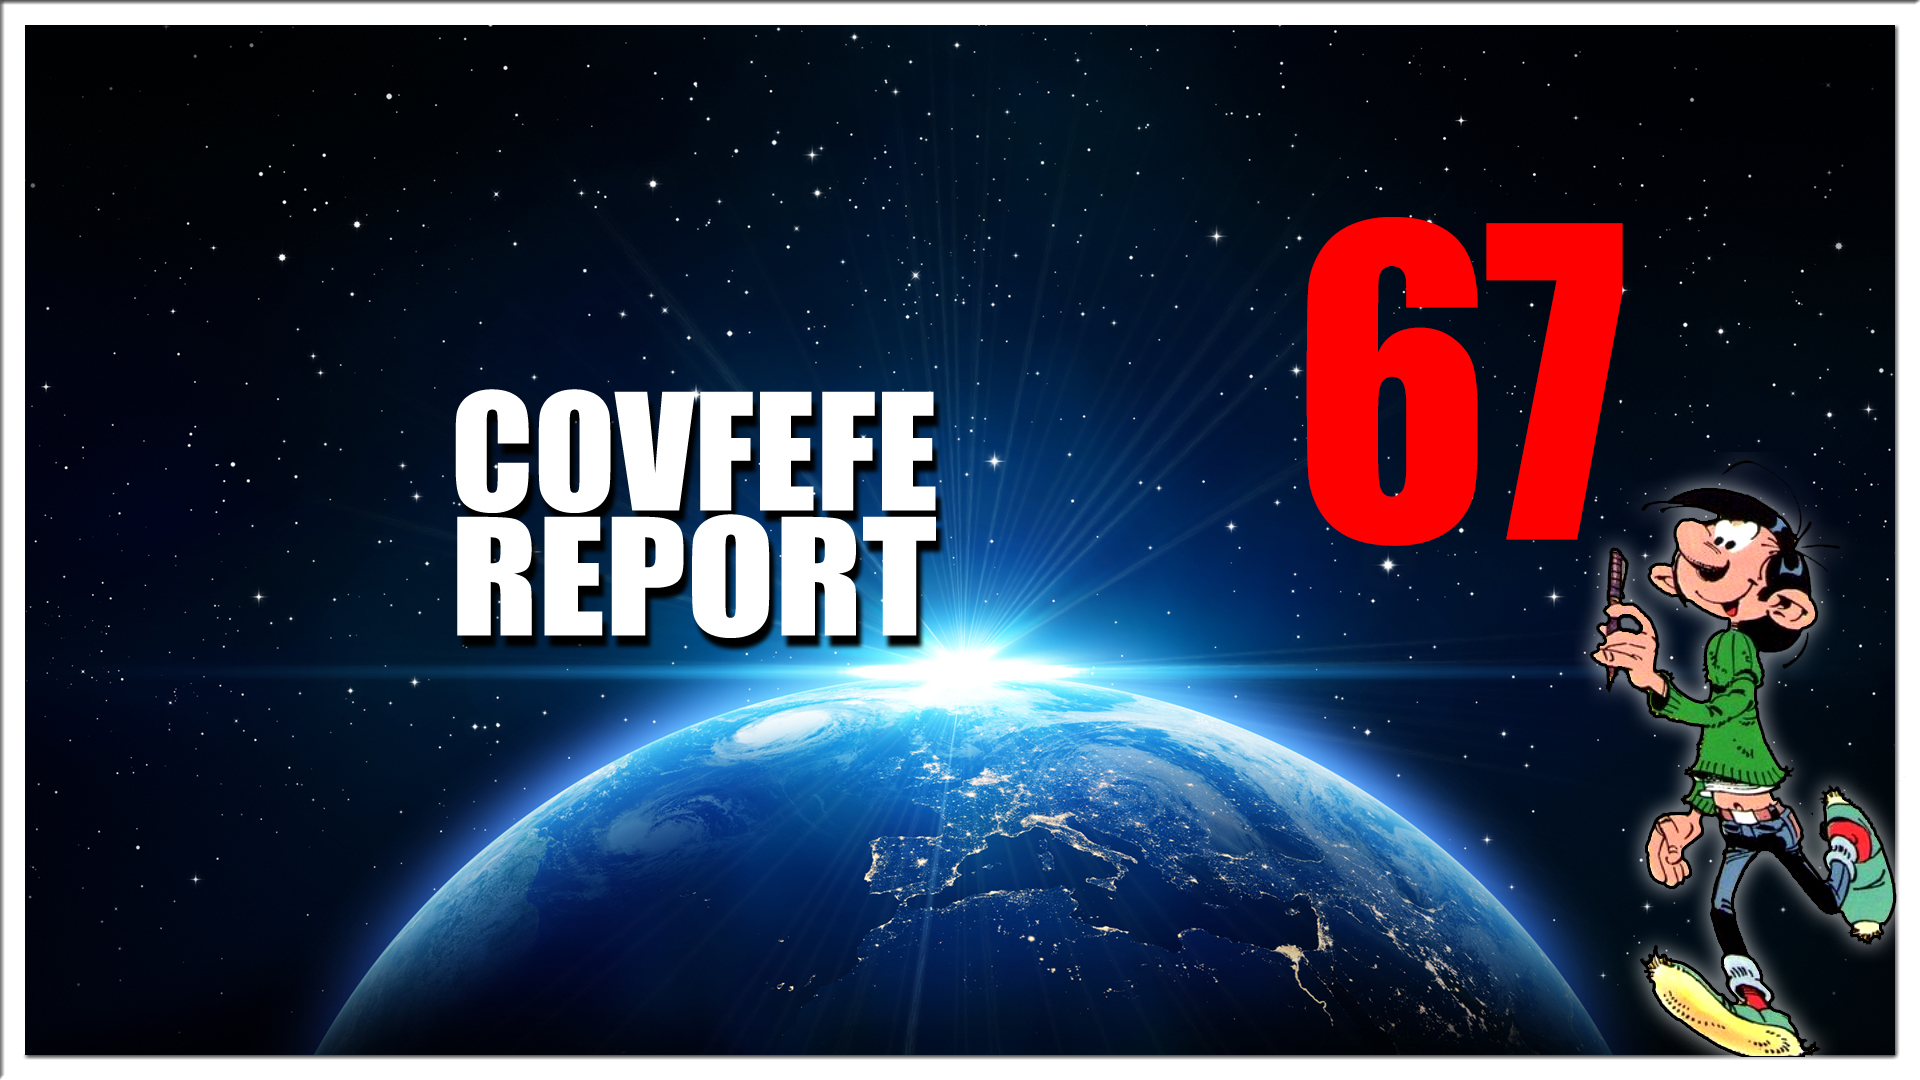 Covfefe Report 67. Qpost, censuur 45, Twatter, Qnl discord, No Name